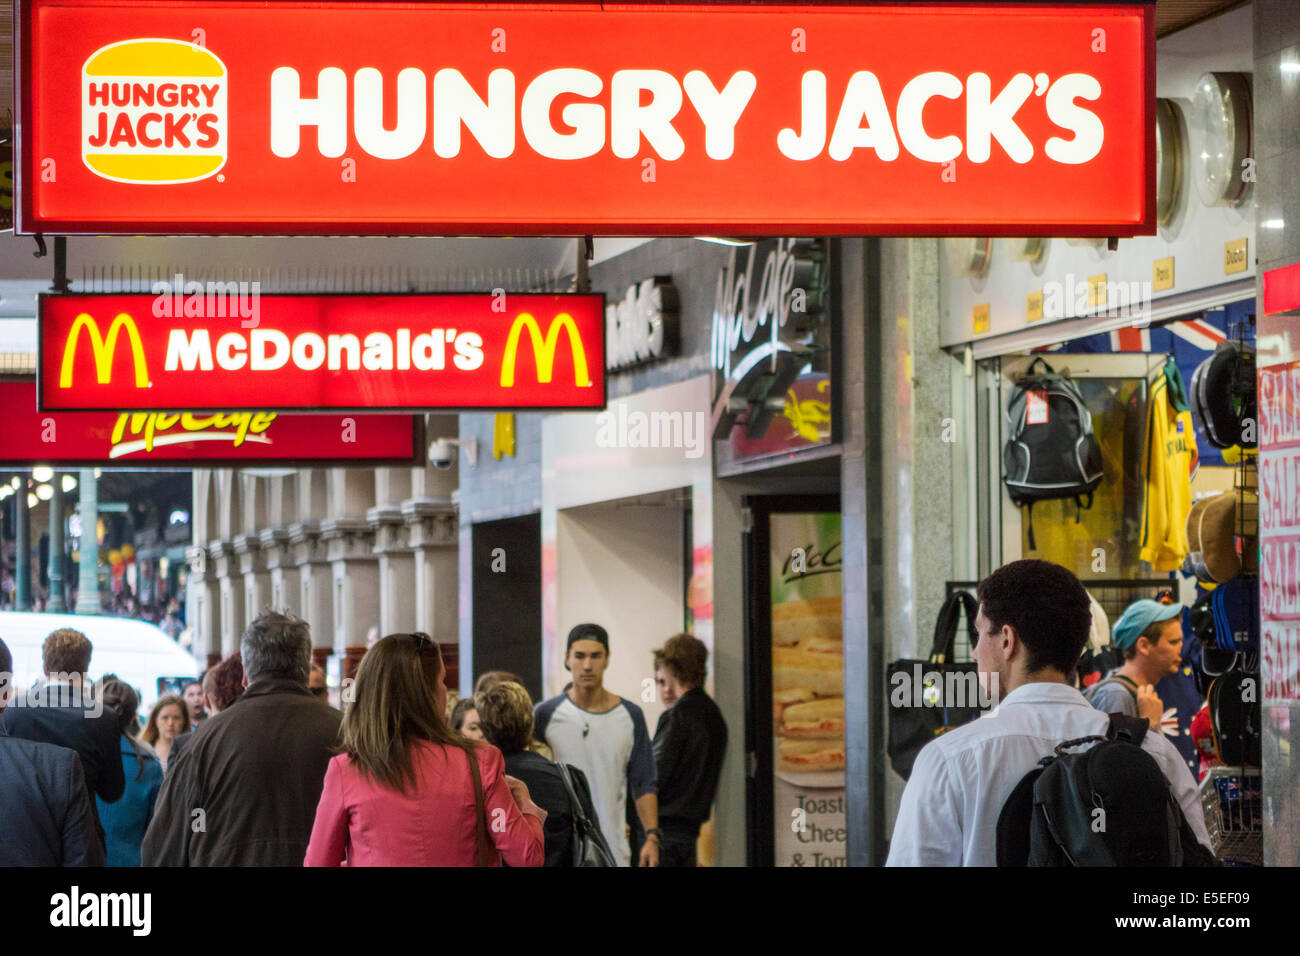 Melbourne Australie, Swanston Street, Hungry Jack's, hamburgers, hamburgers, Burger King, hamburgers, hamburgers, McDonald's, hamburgers, hamburgers, restauration rapide, restaurant Banque D'Images